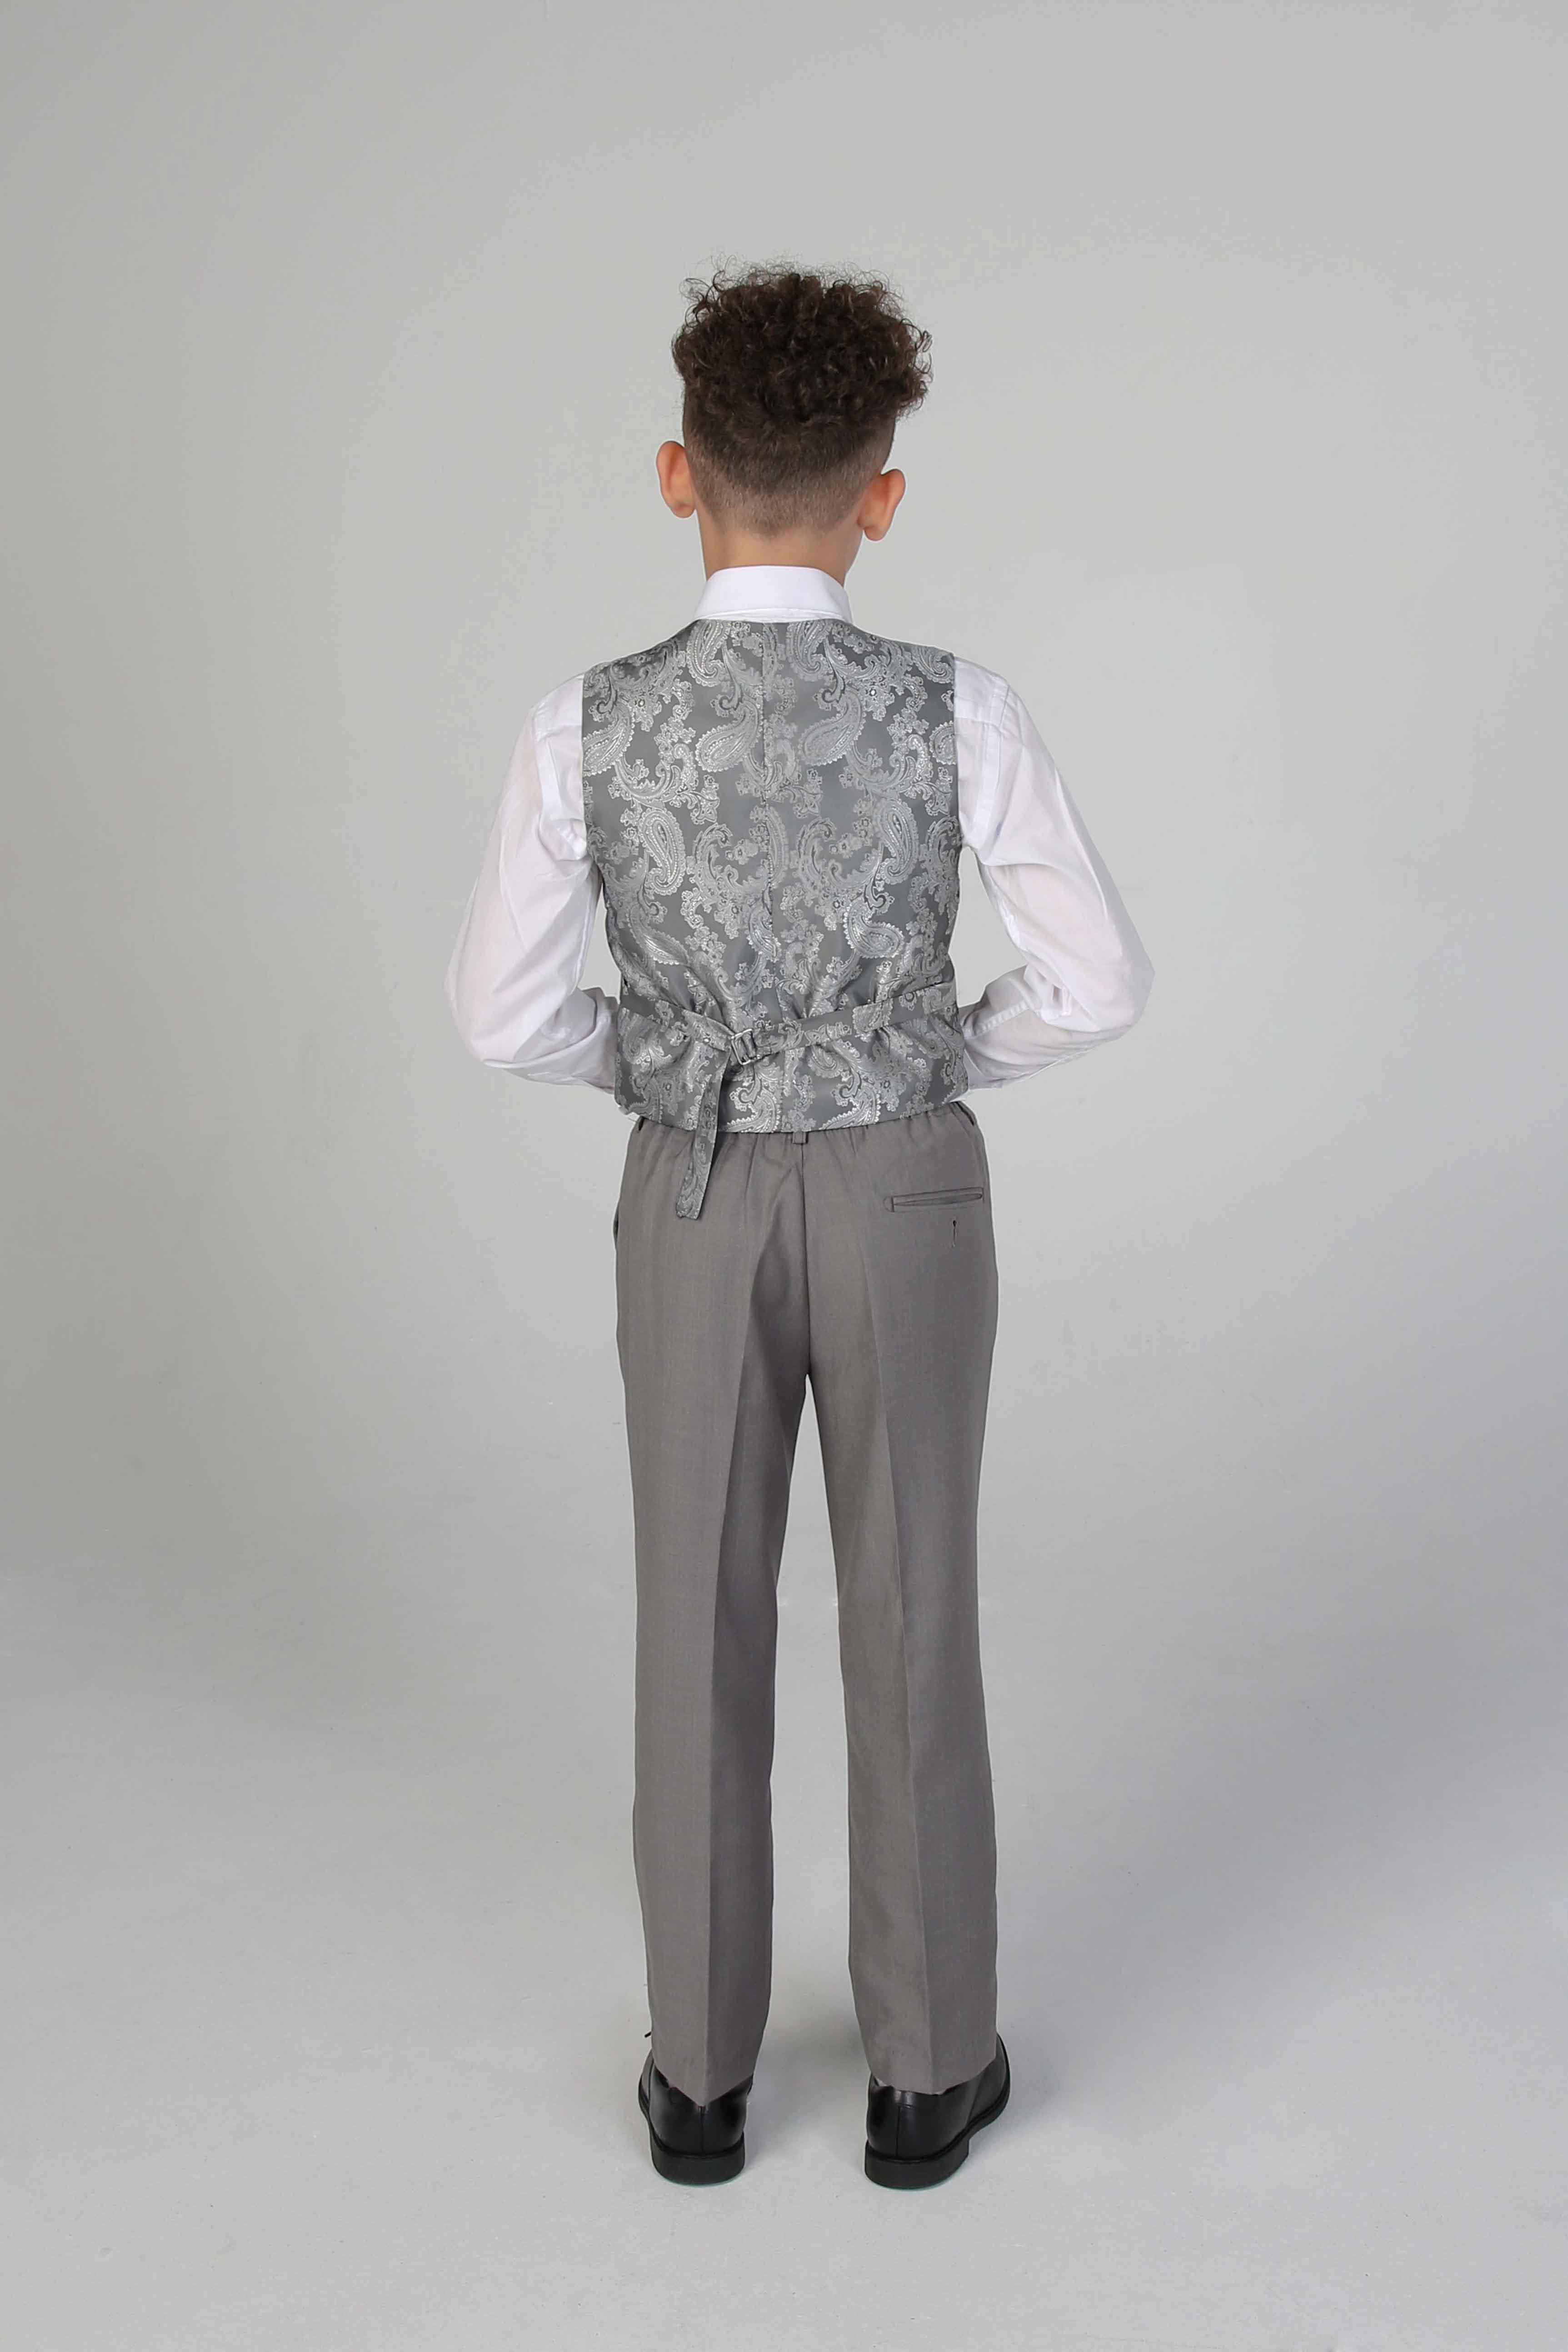 Paul Andrew Children - Device - Boy's Charles Grey Three Piece Suit